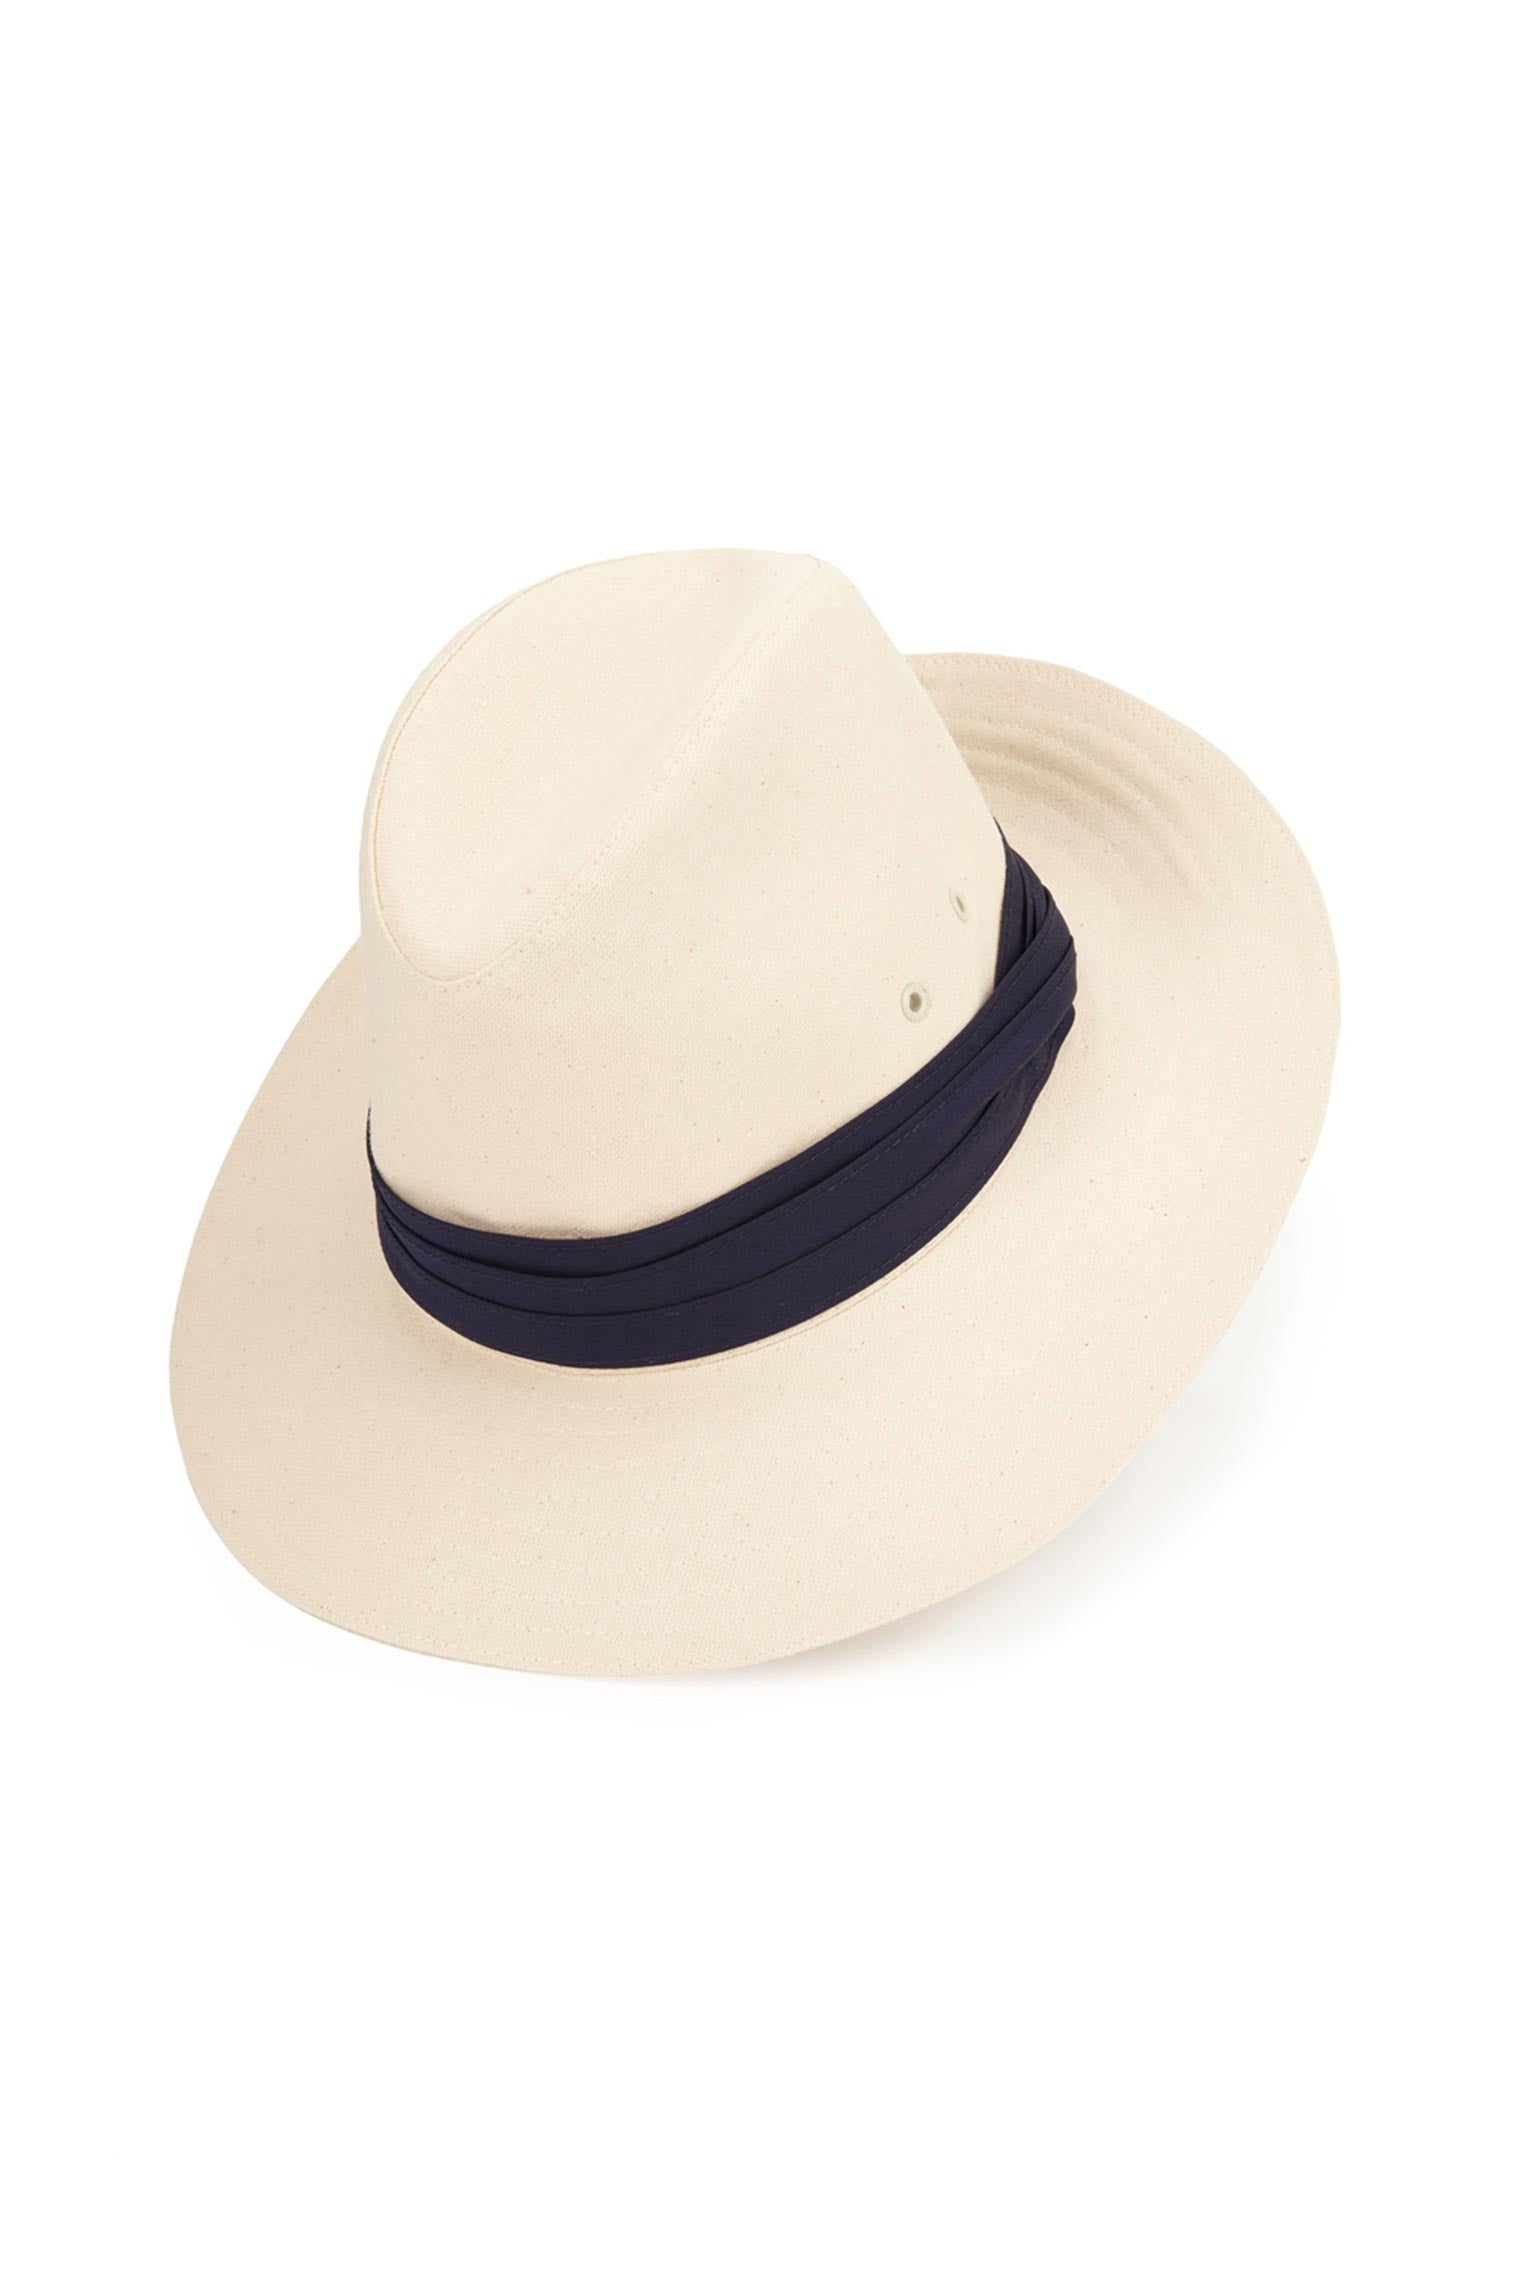 Namibia Calico Fedora - Panamas, Straw and Sun Hats for Men - Lock & Co. Hatters London UK